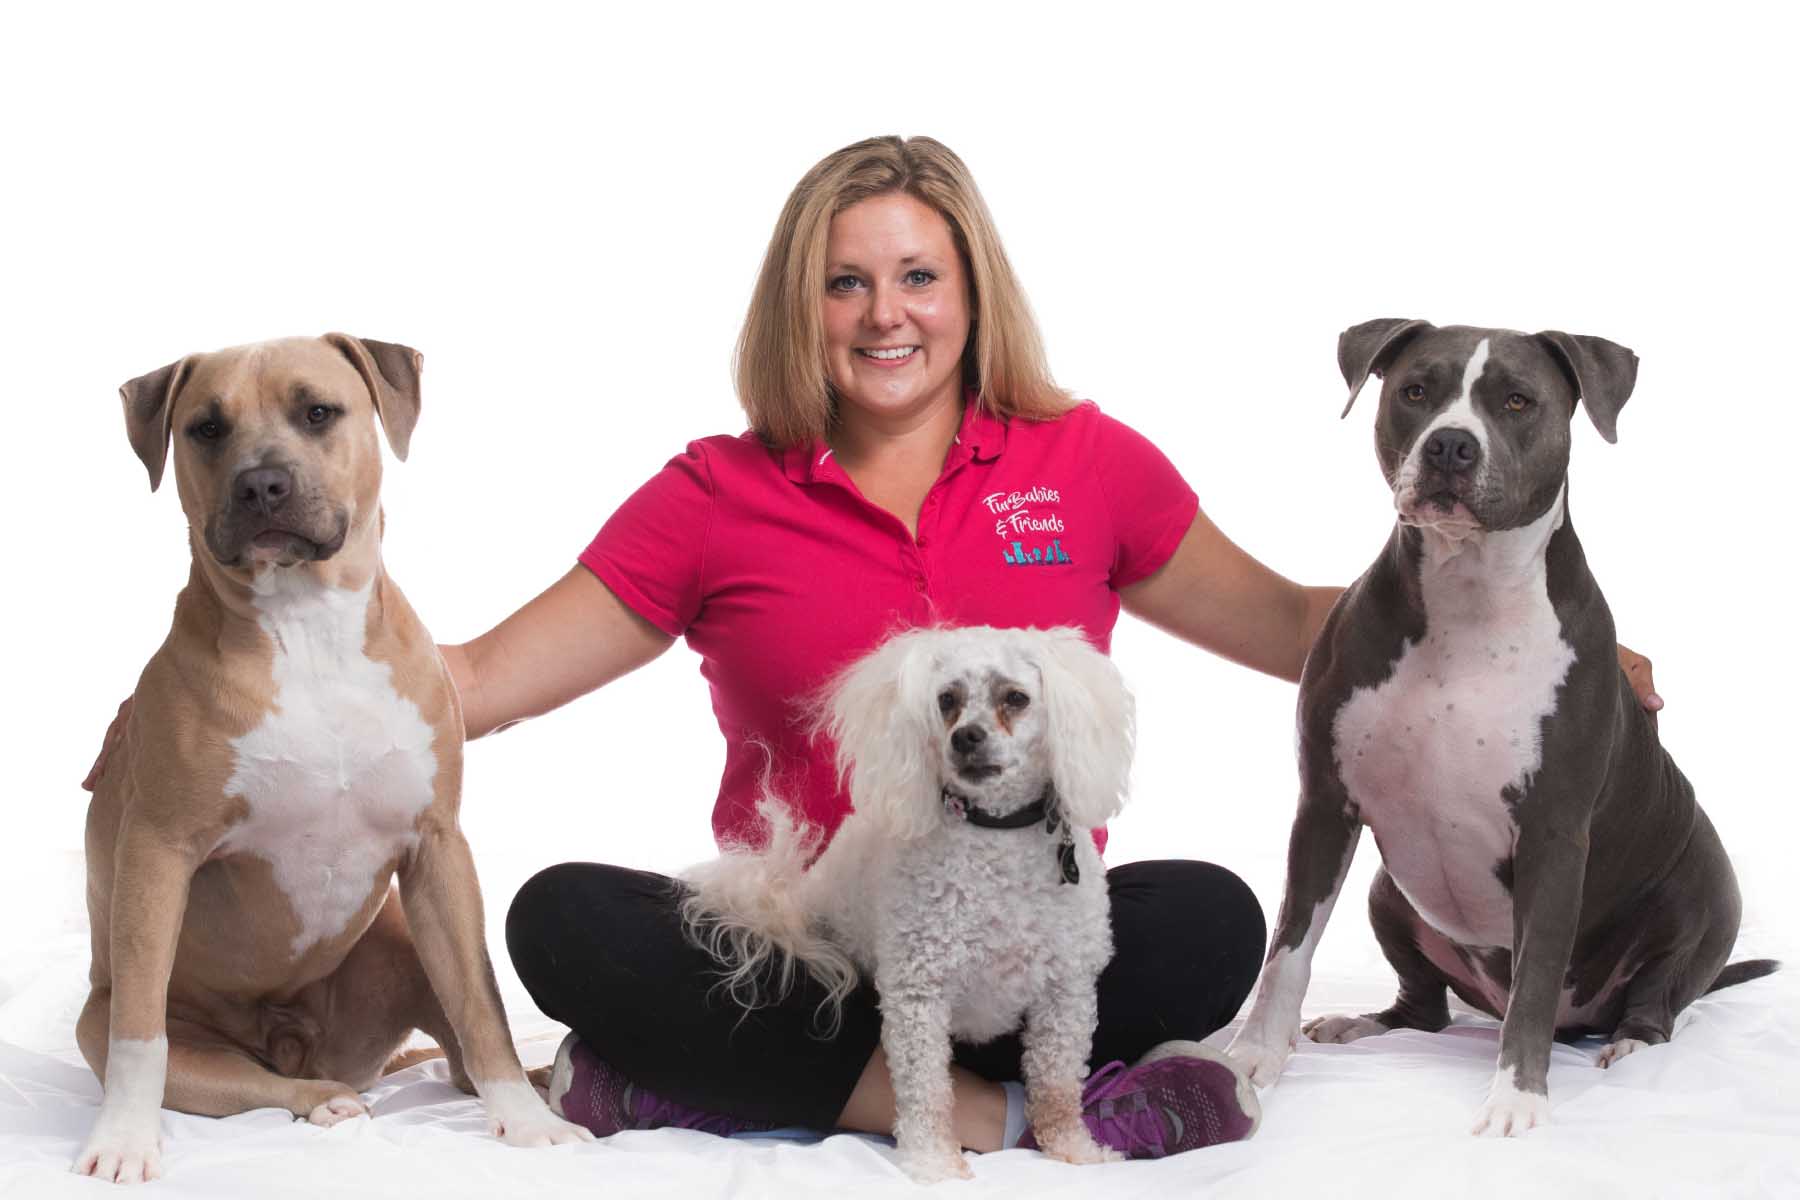 Glendale, AZ 5 Star Pet Services Provider for Dog Training, Pet Sitting, Dog Walking, Basic Dog Grooming and More!